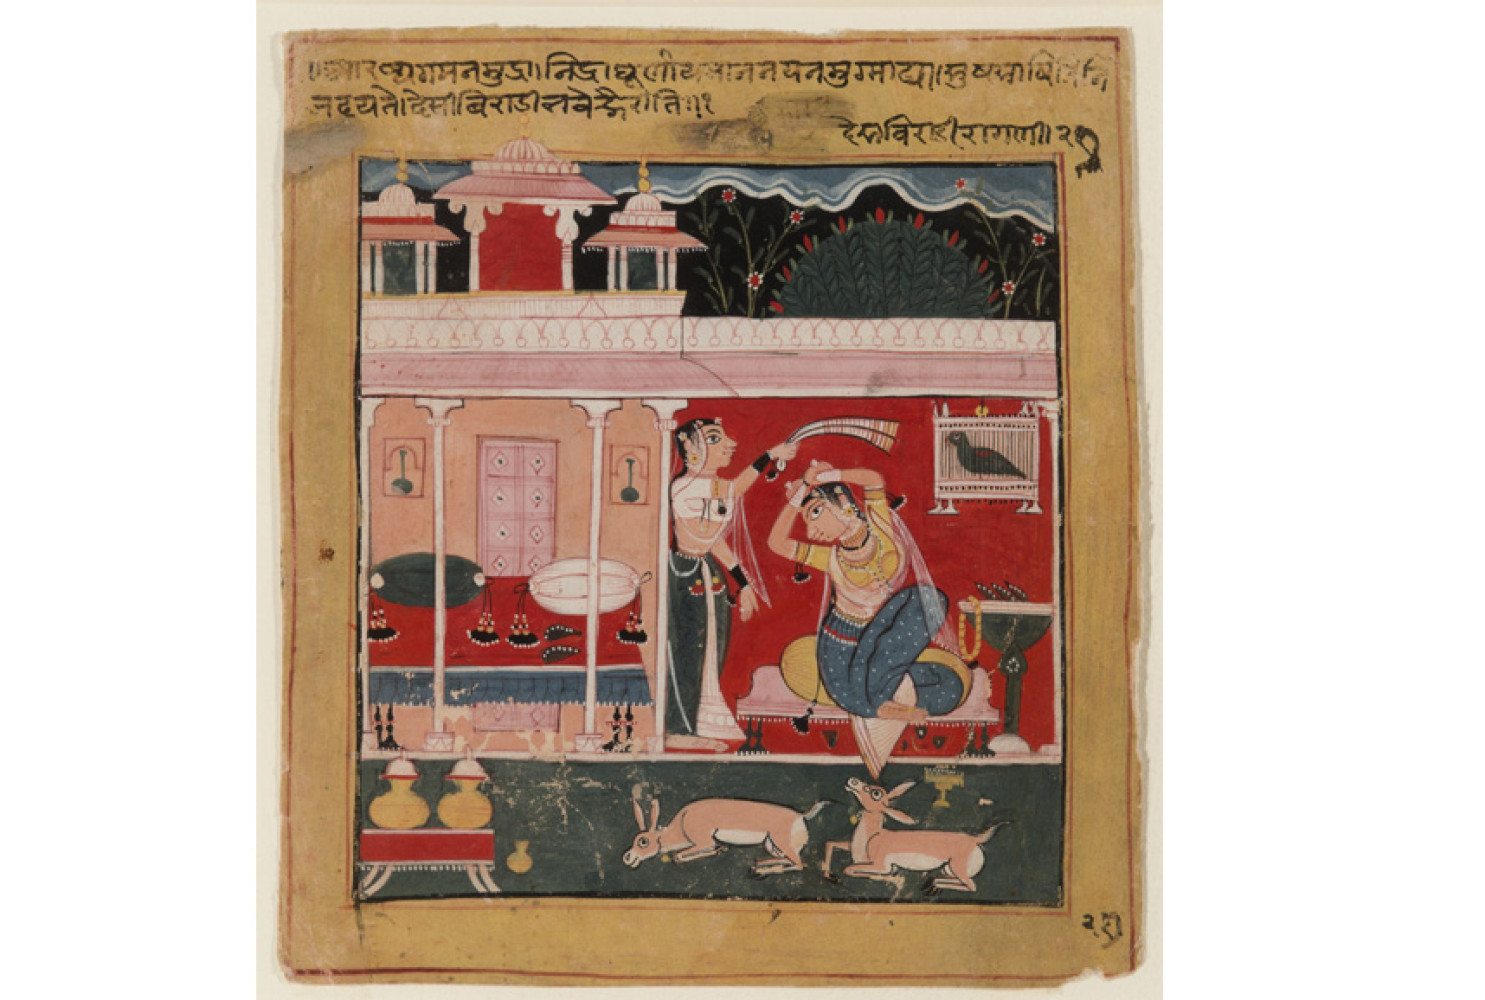 Desavaradi ragini (a personification of a musical mode), from a Ragamala (